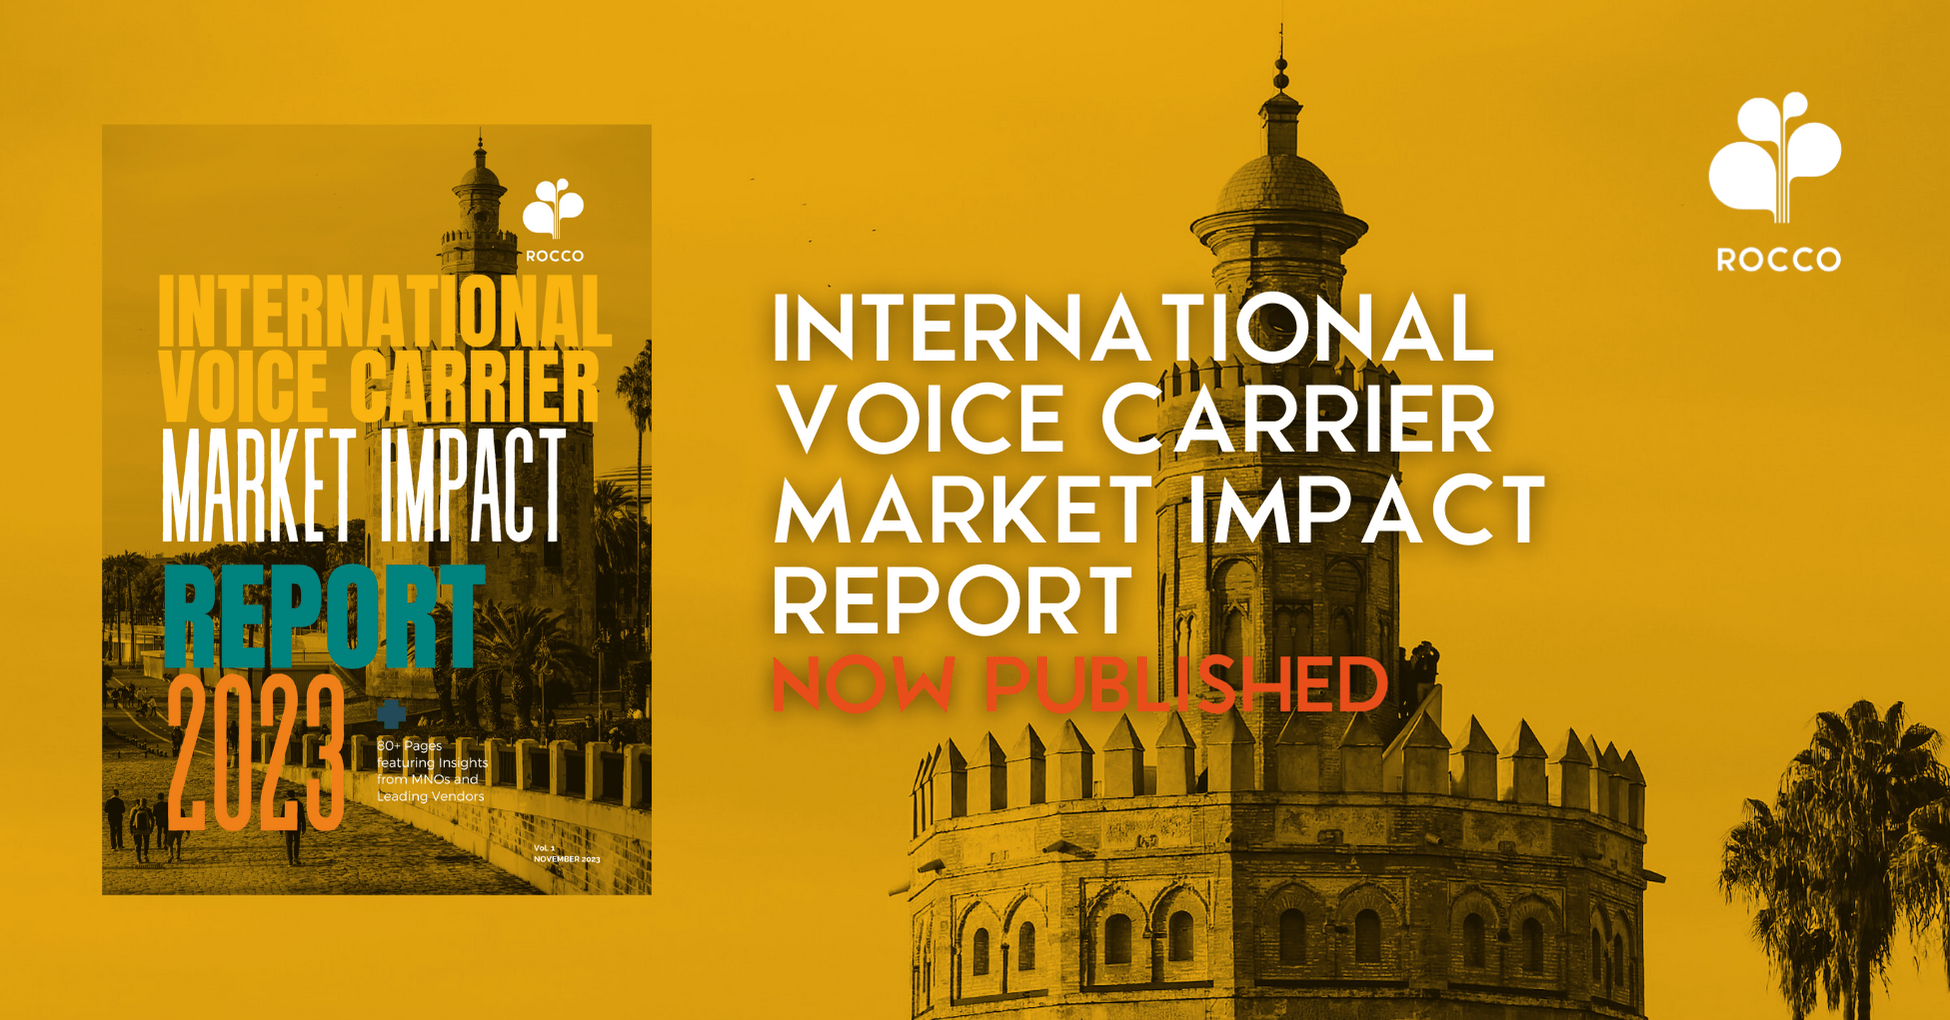 International Voice Carrier Market Impact Report 2023